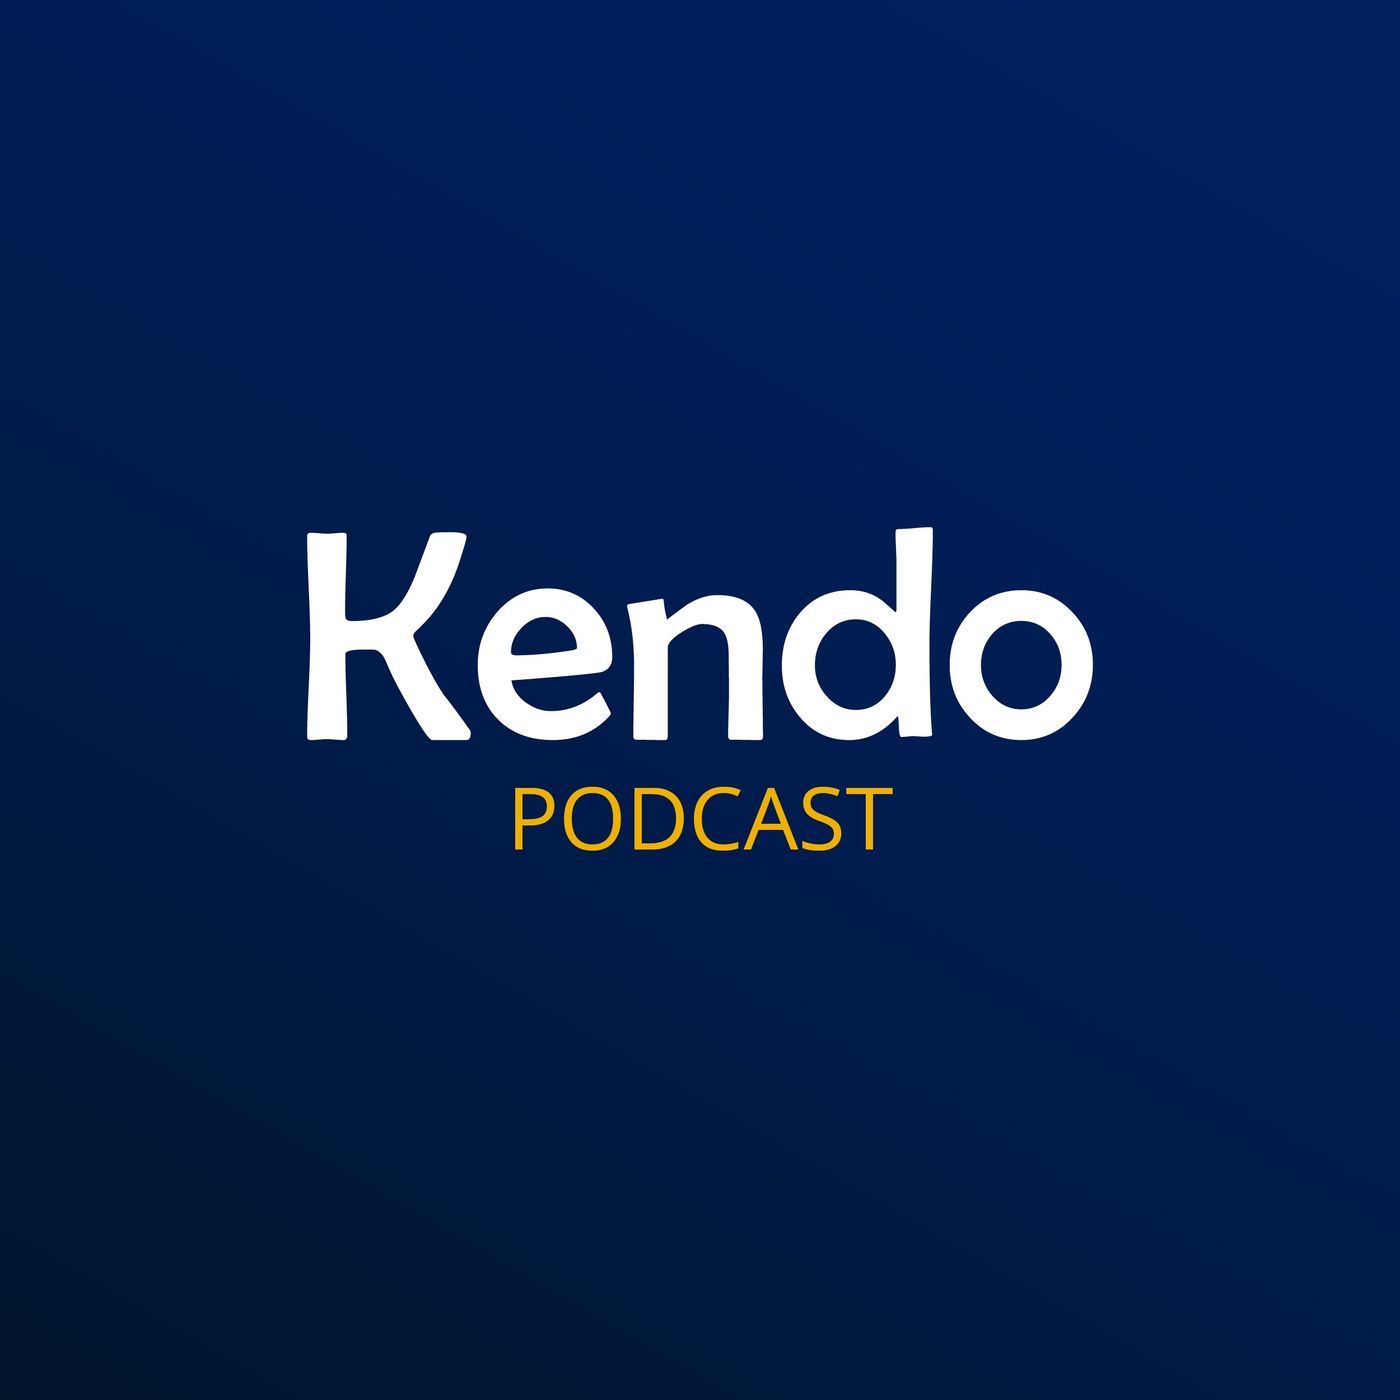 Kendo Corporation